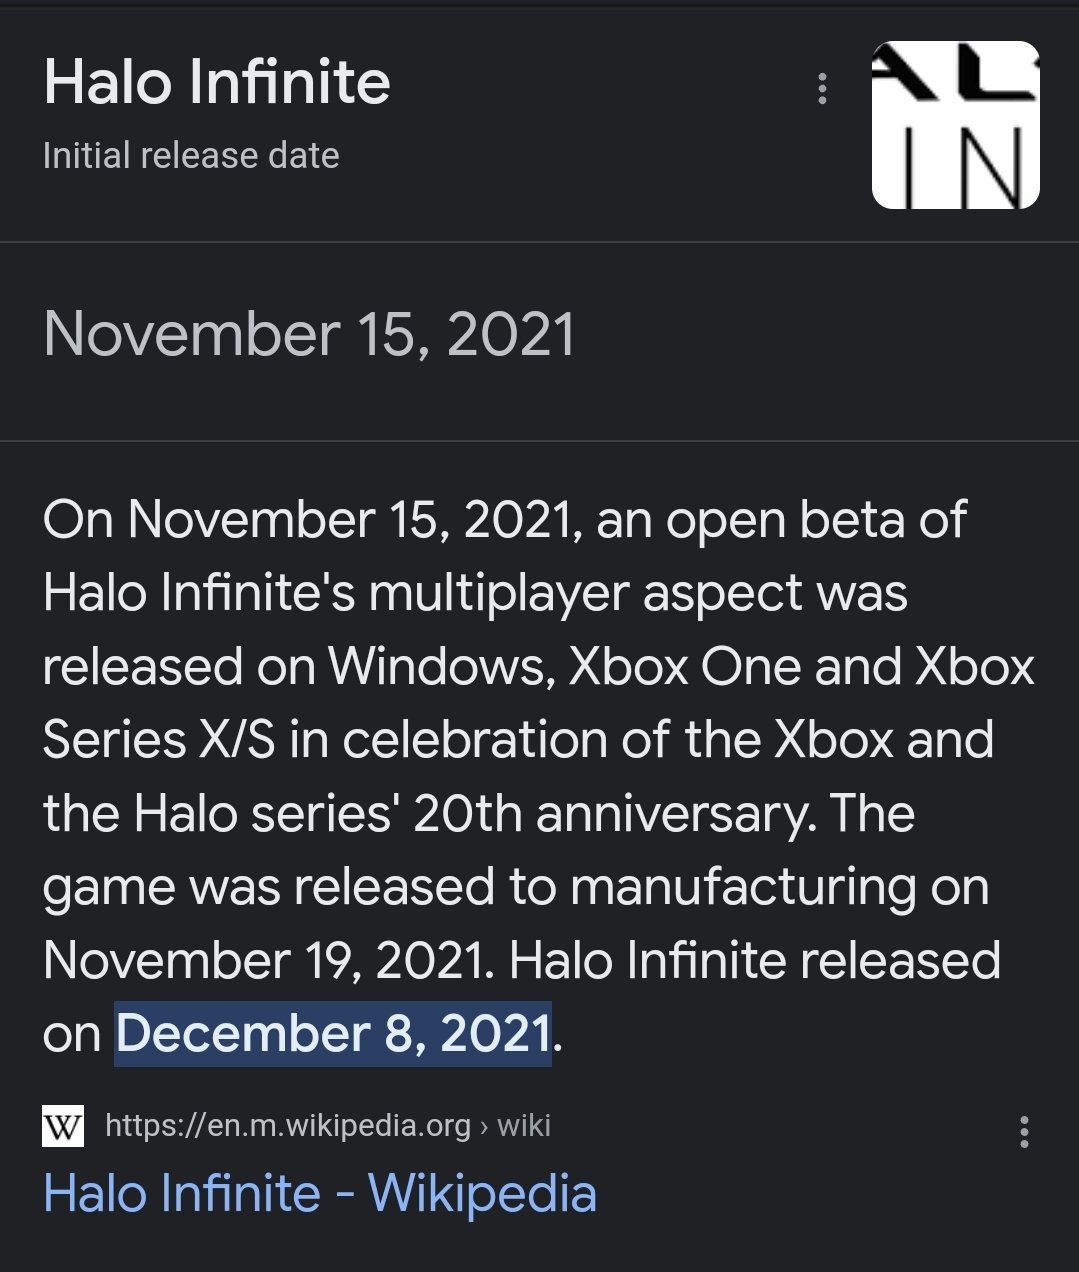 Halo Infinite - Wikipedia